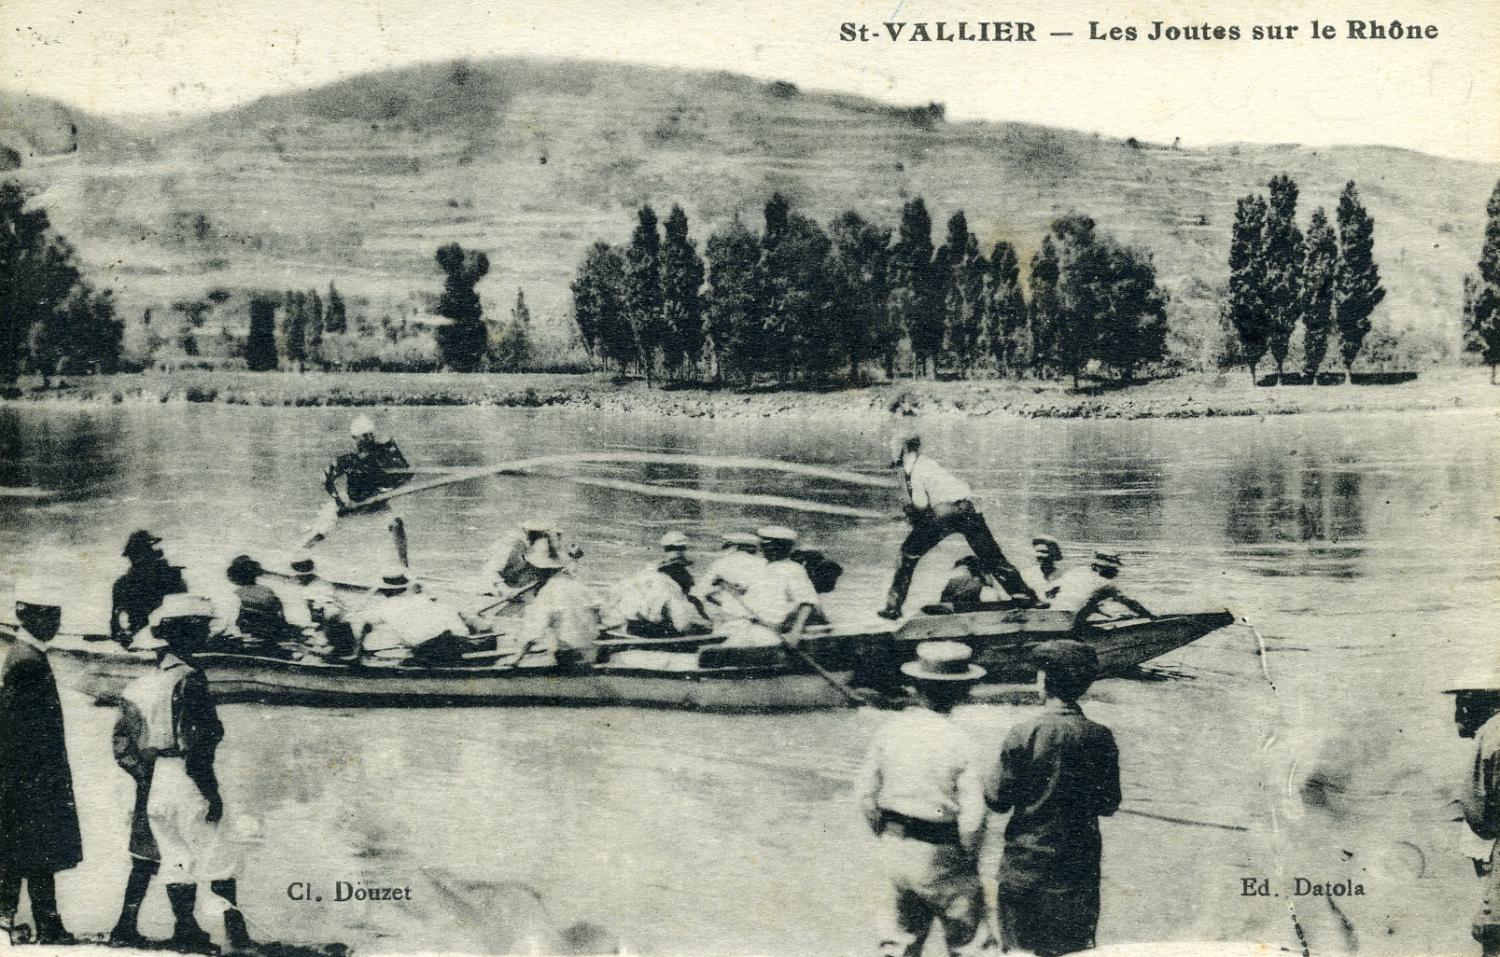 St-Vallier